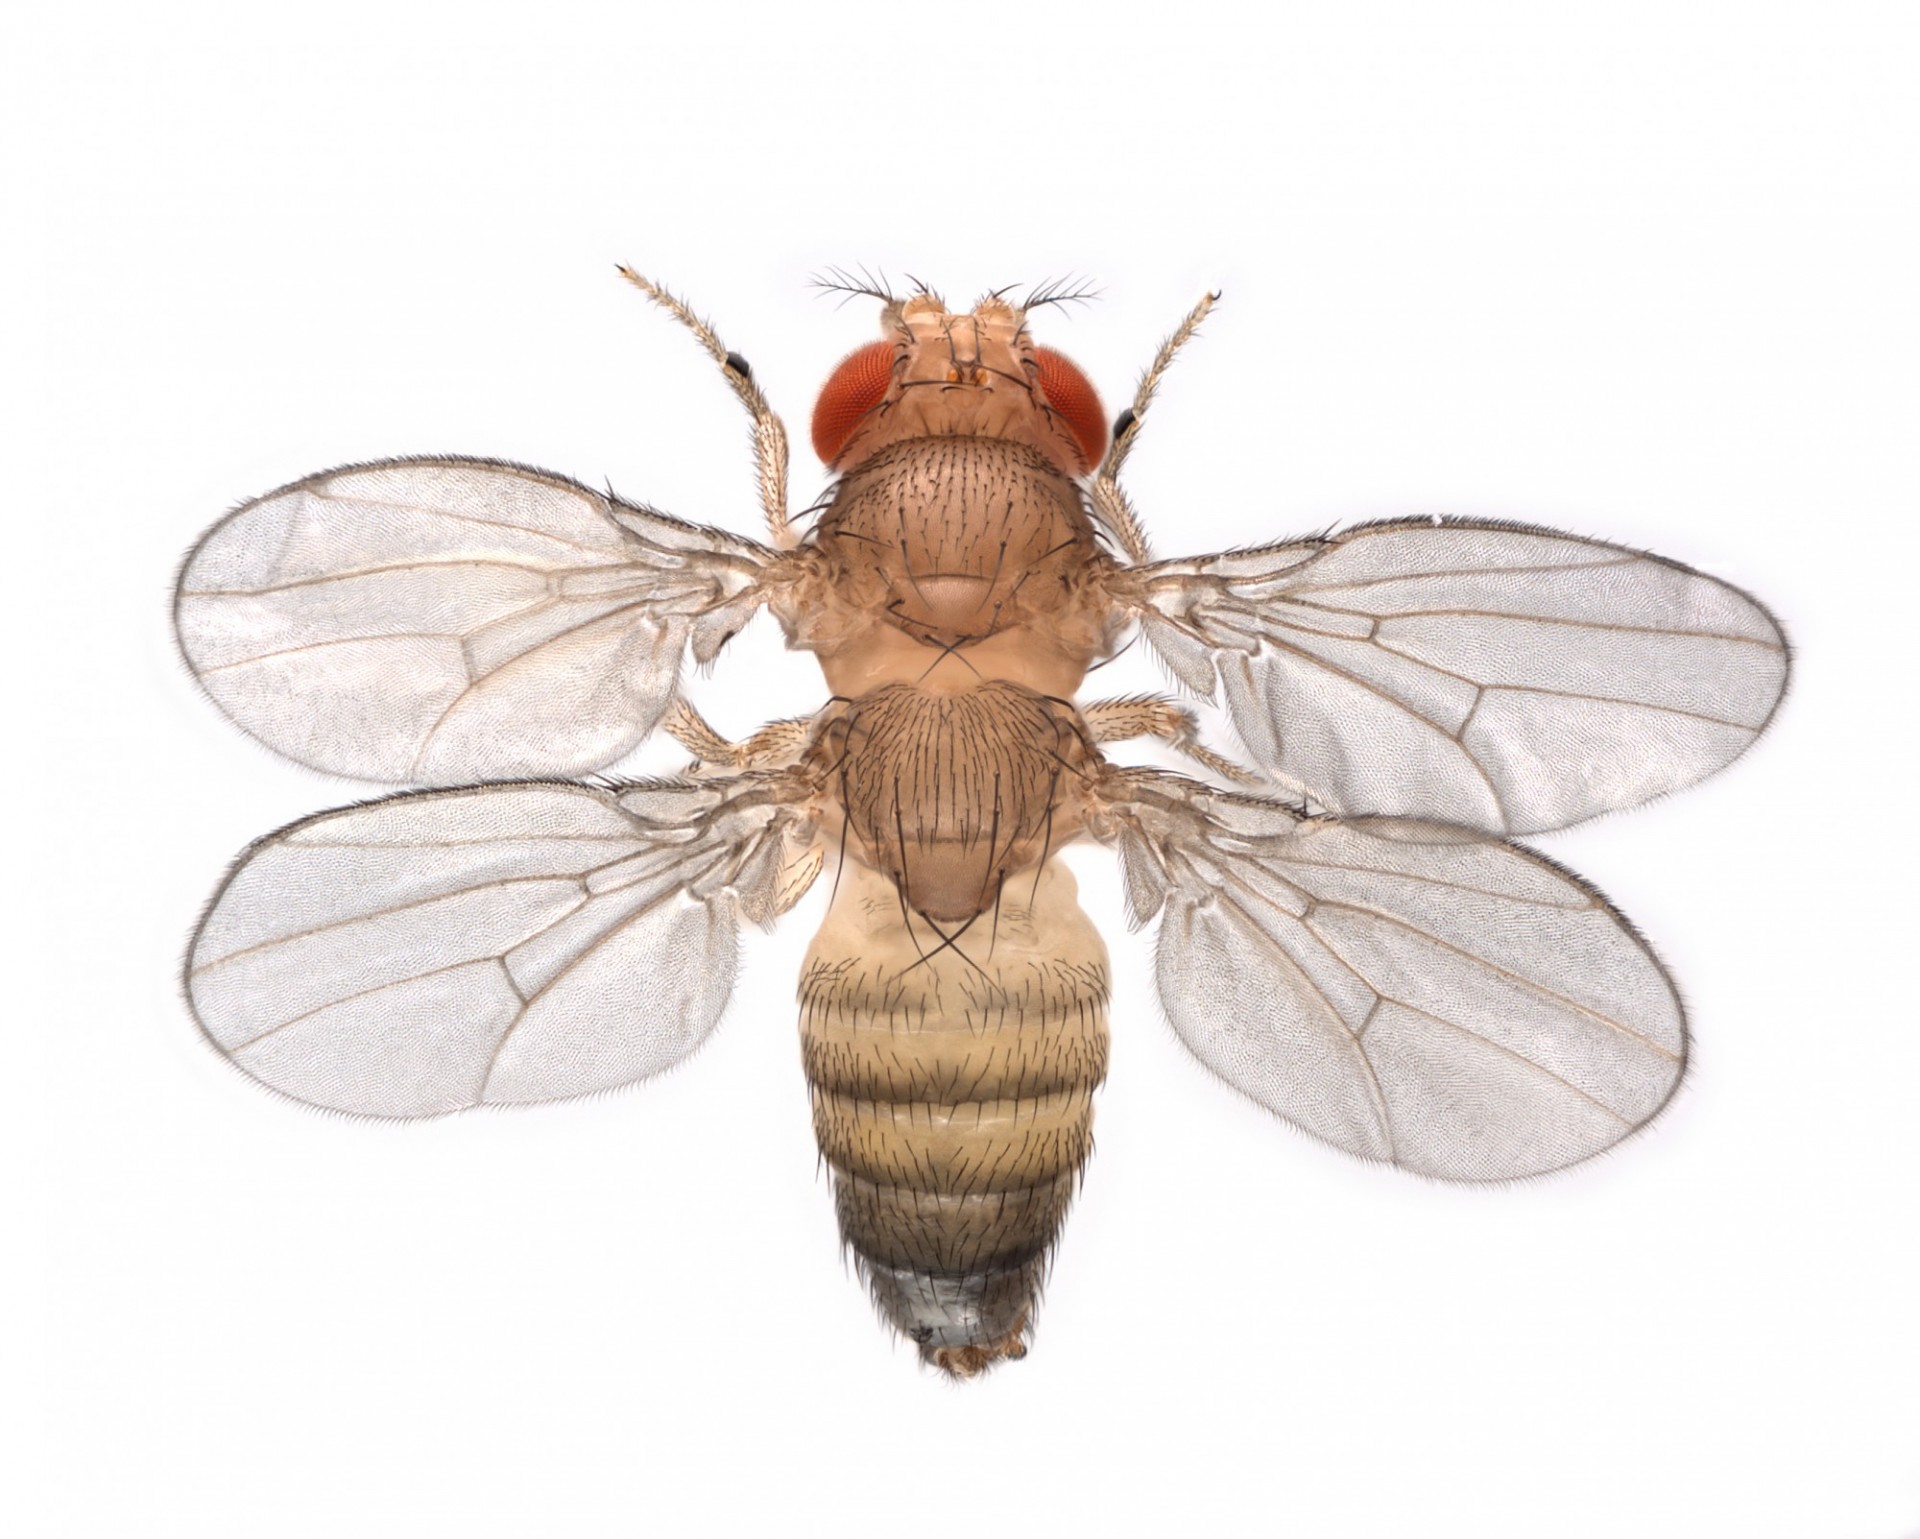 bithorax fly; photo credit: Nicolas Gompel